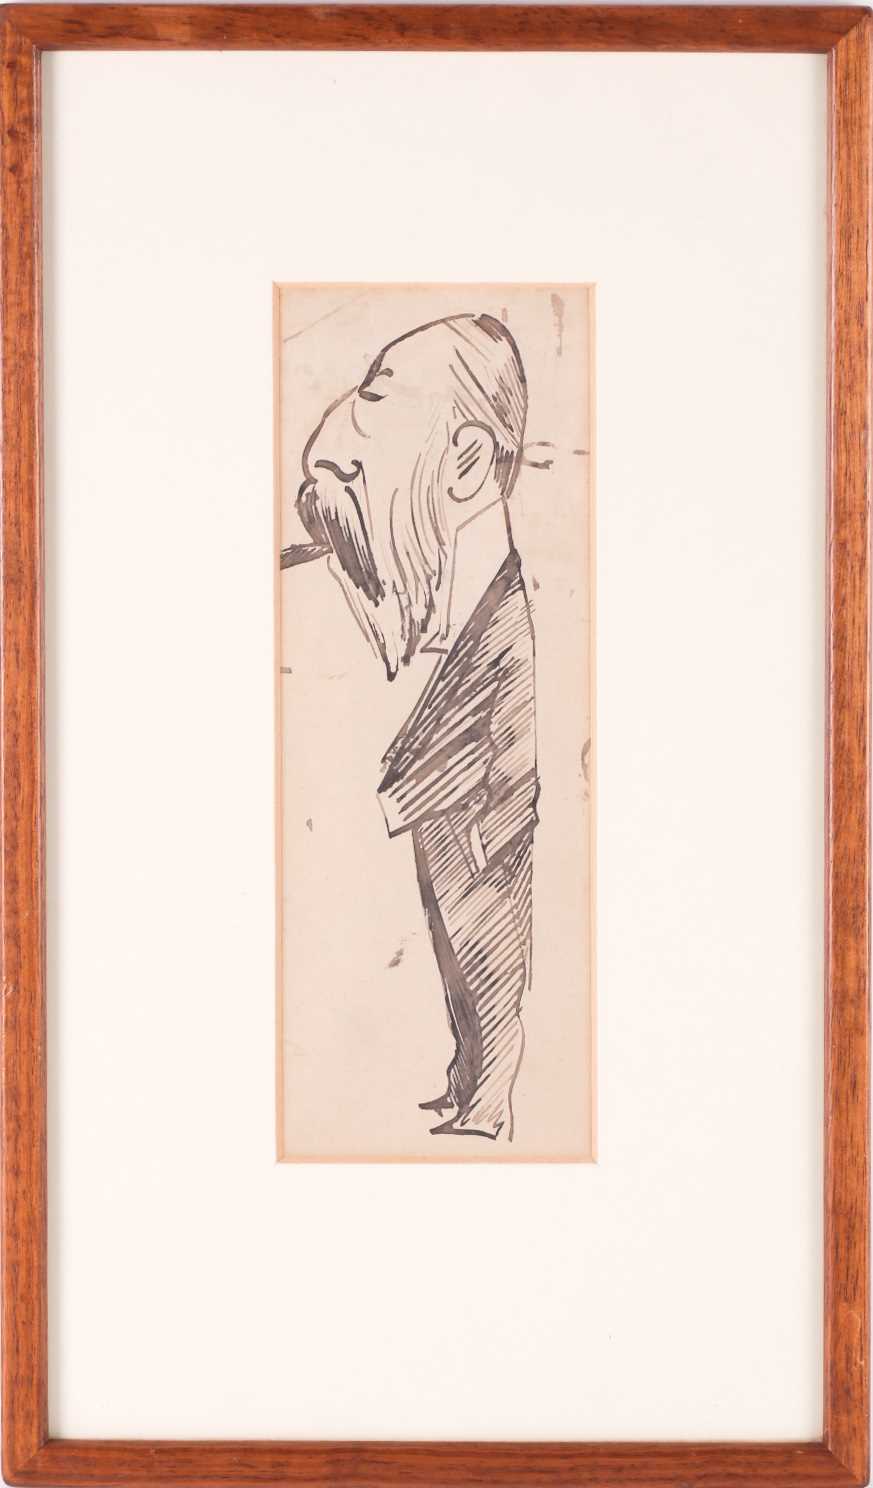 Max Beerbohm (1872-1956), 'Bearded Gentleman in Evening Dress', c.1890, pen and ink sketch on paper,